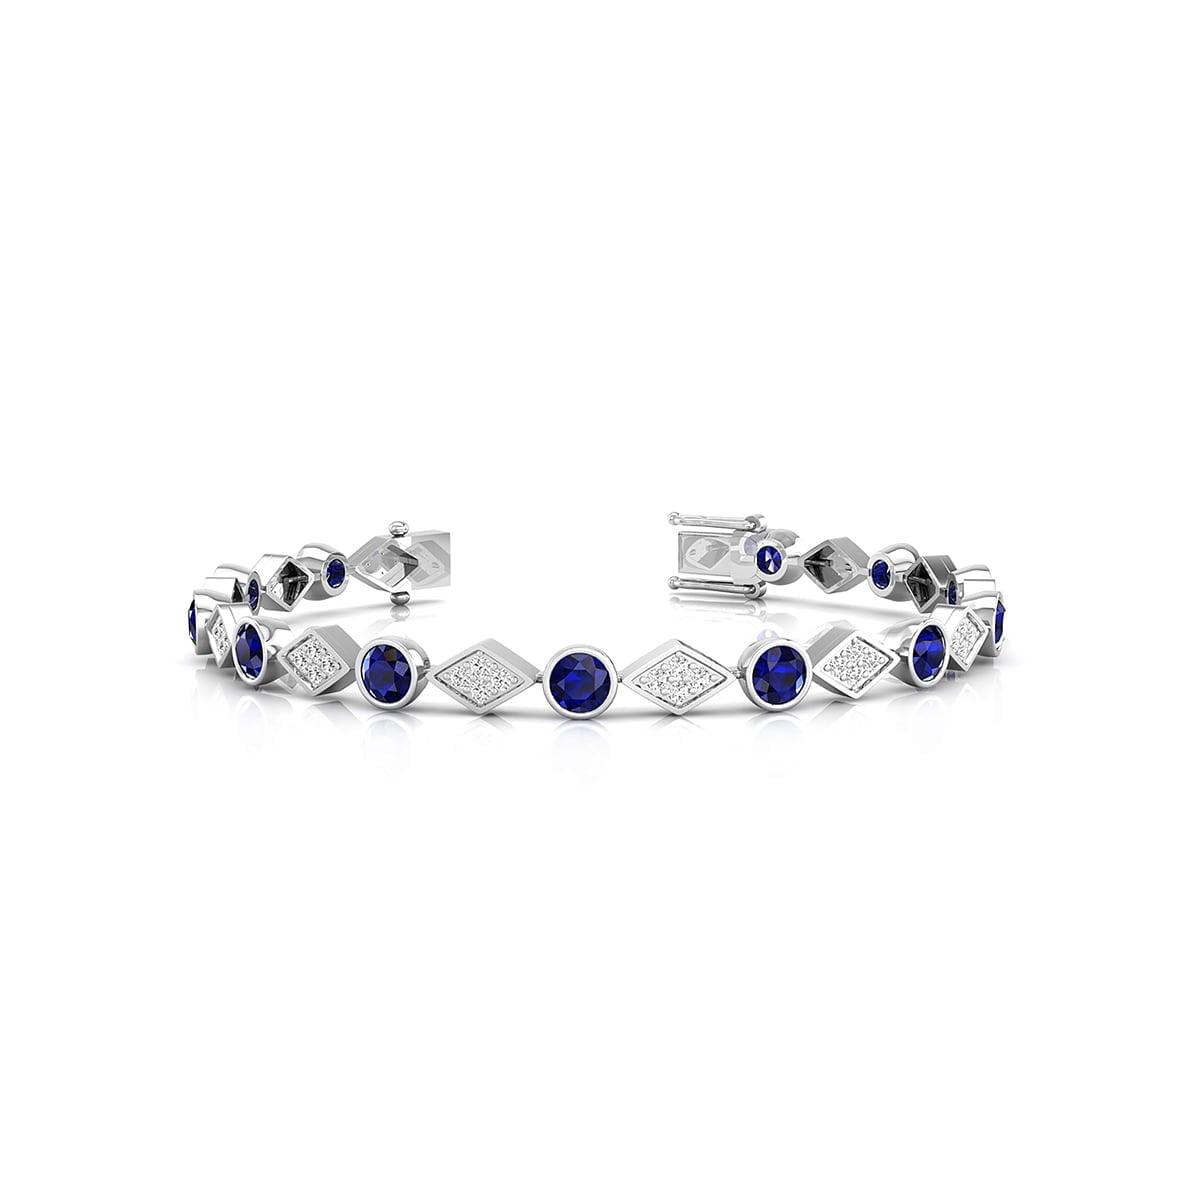 Blue Sapphire & White Round Cut CZ Stone Rhombus Shape Tennis Bracelet For Birthday Gift (5 5/6 TCW)